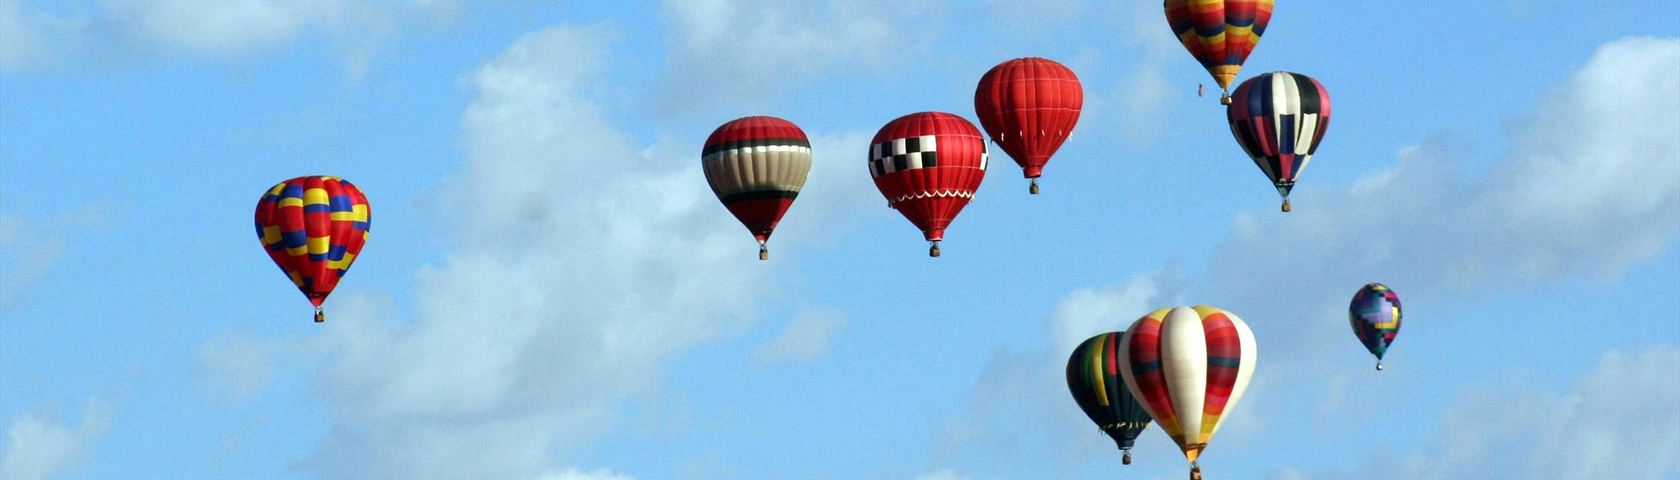 Hot Air Balloons #6